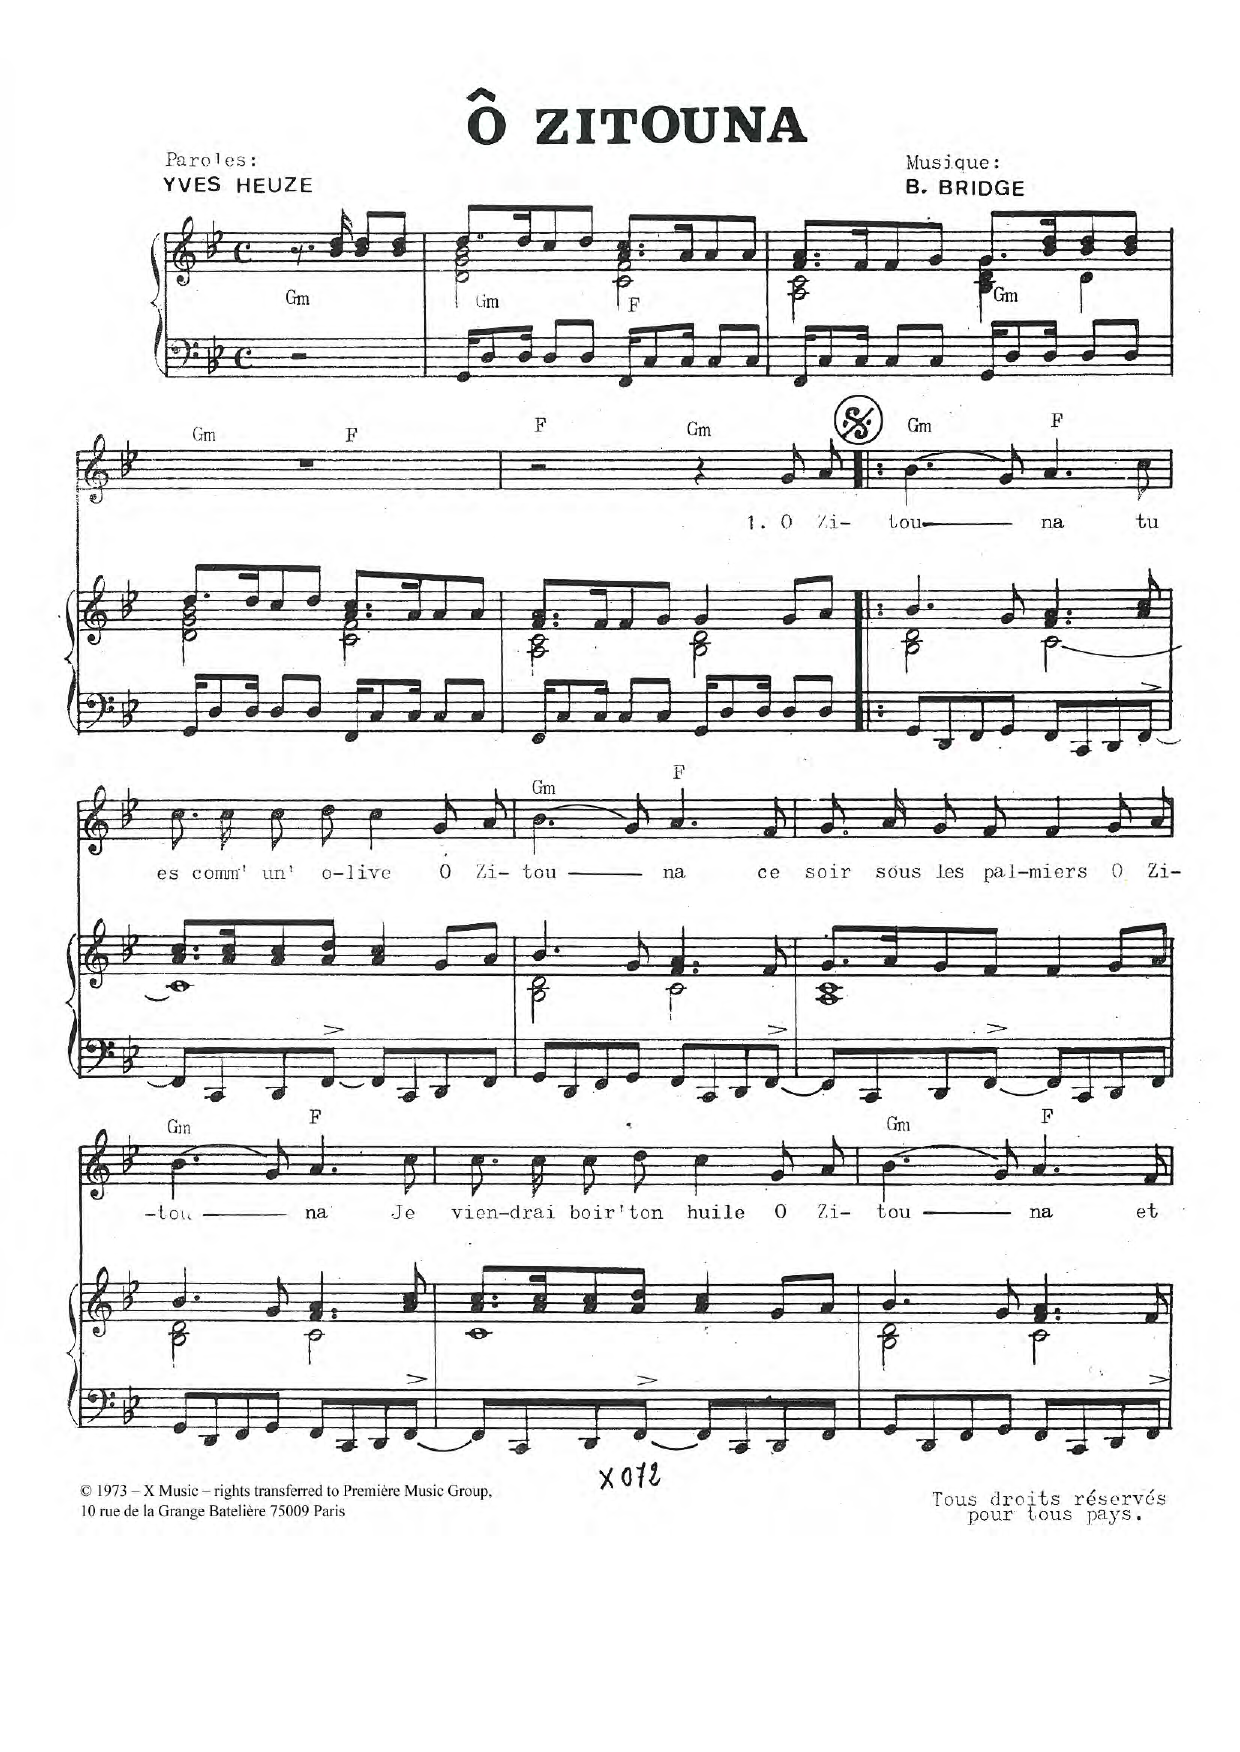 Carlos O Zitouna Sheet Music Notes & Chords for Piano & Vocal - Download or Print PDF